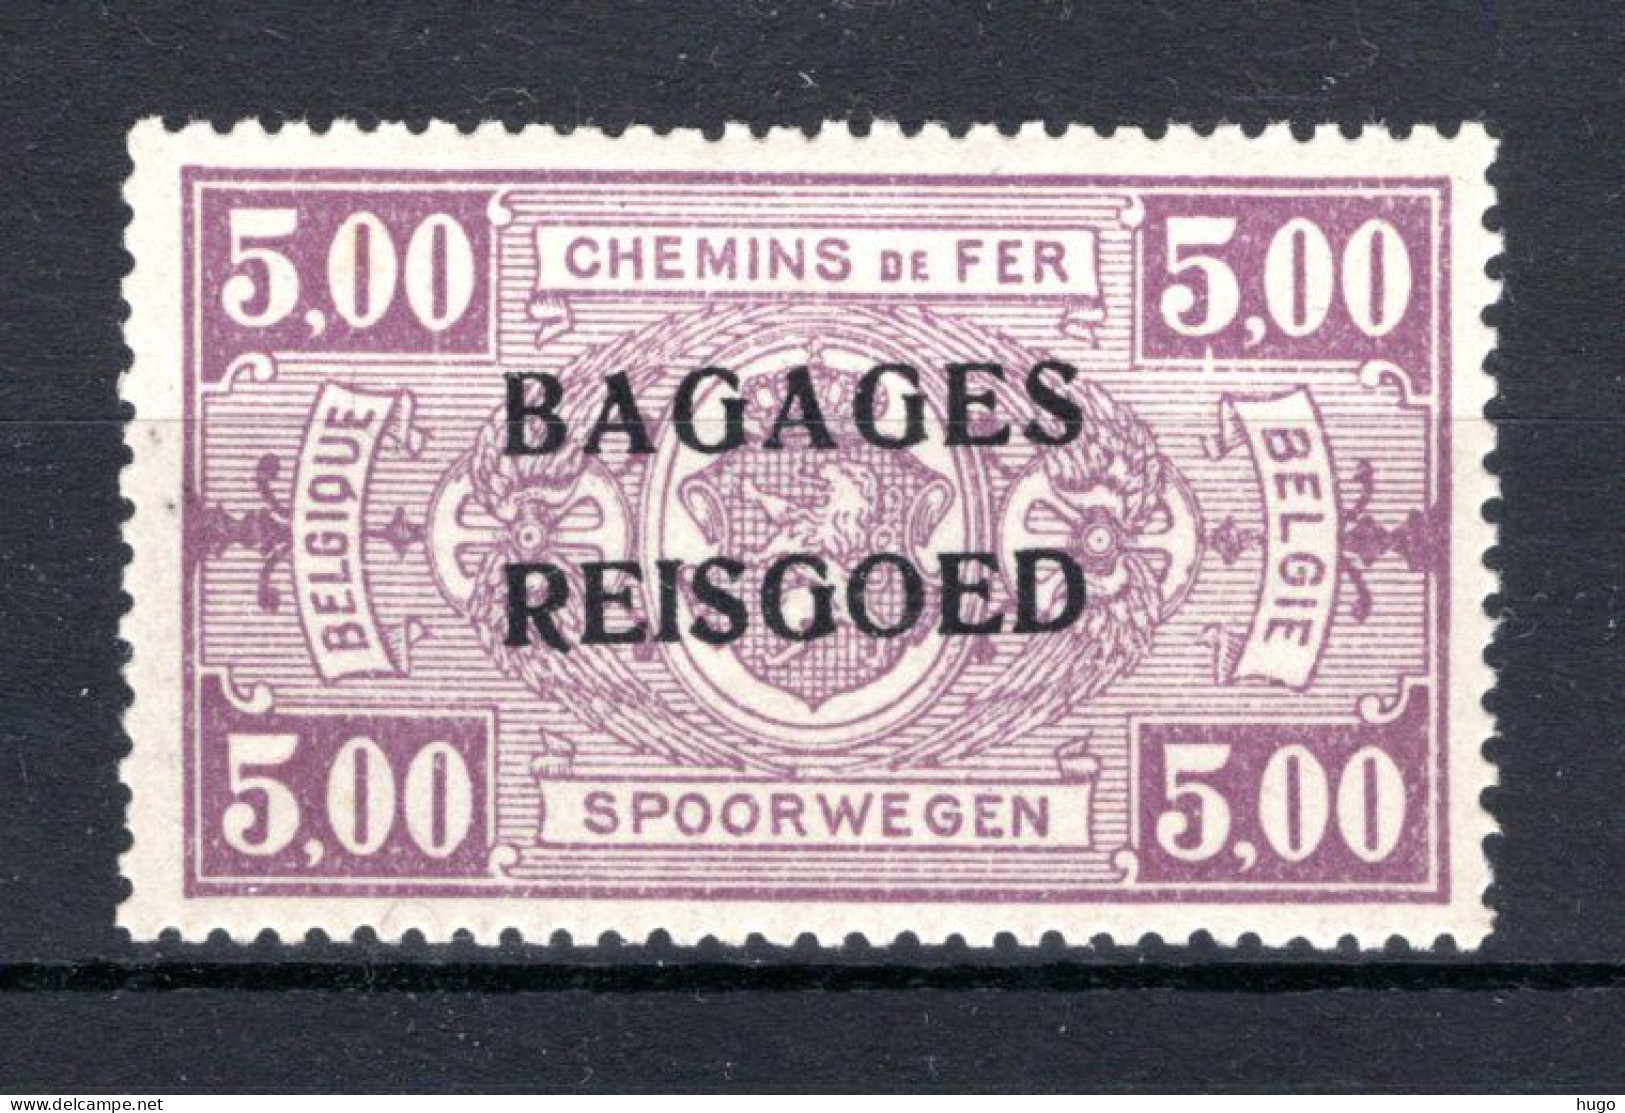 BA14 MNH** 1935 - Spoorwegzegels Met Opdruk "BAGAGES - REISGOED"  - Bagages [BA]